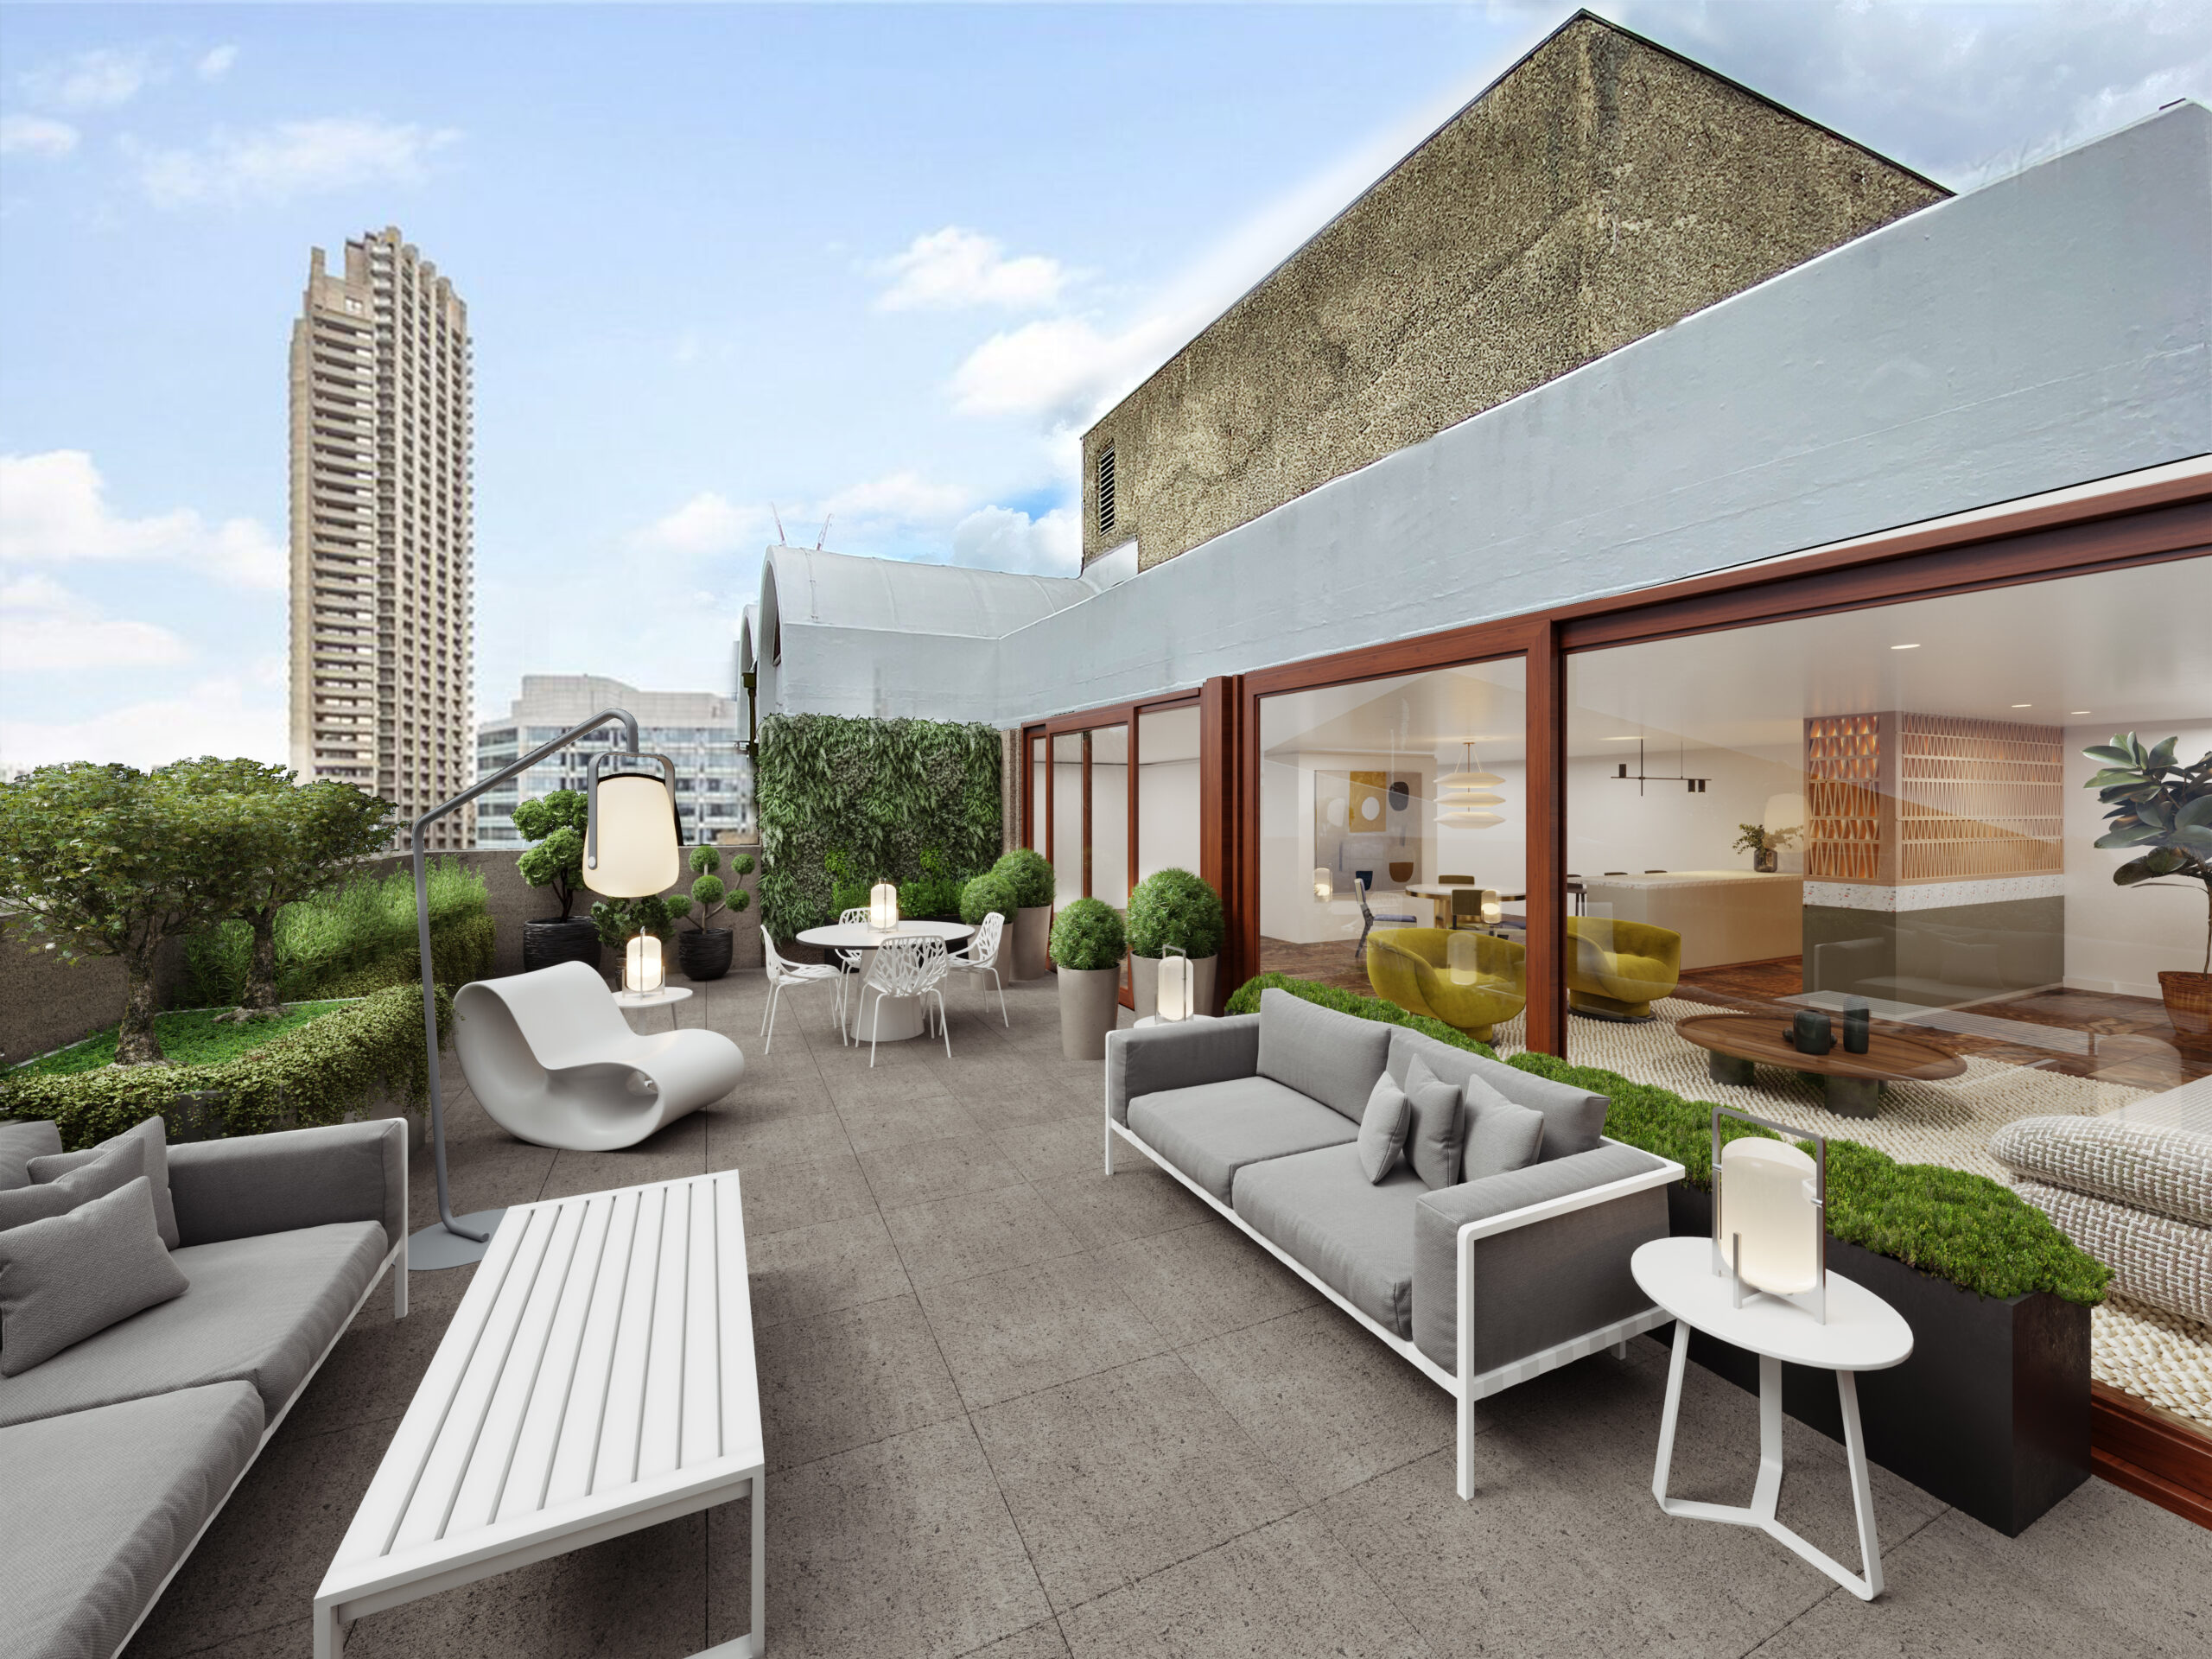 Barbican terrace with contemporary furniture - City Pied a Terre - LLI Design